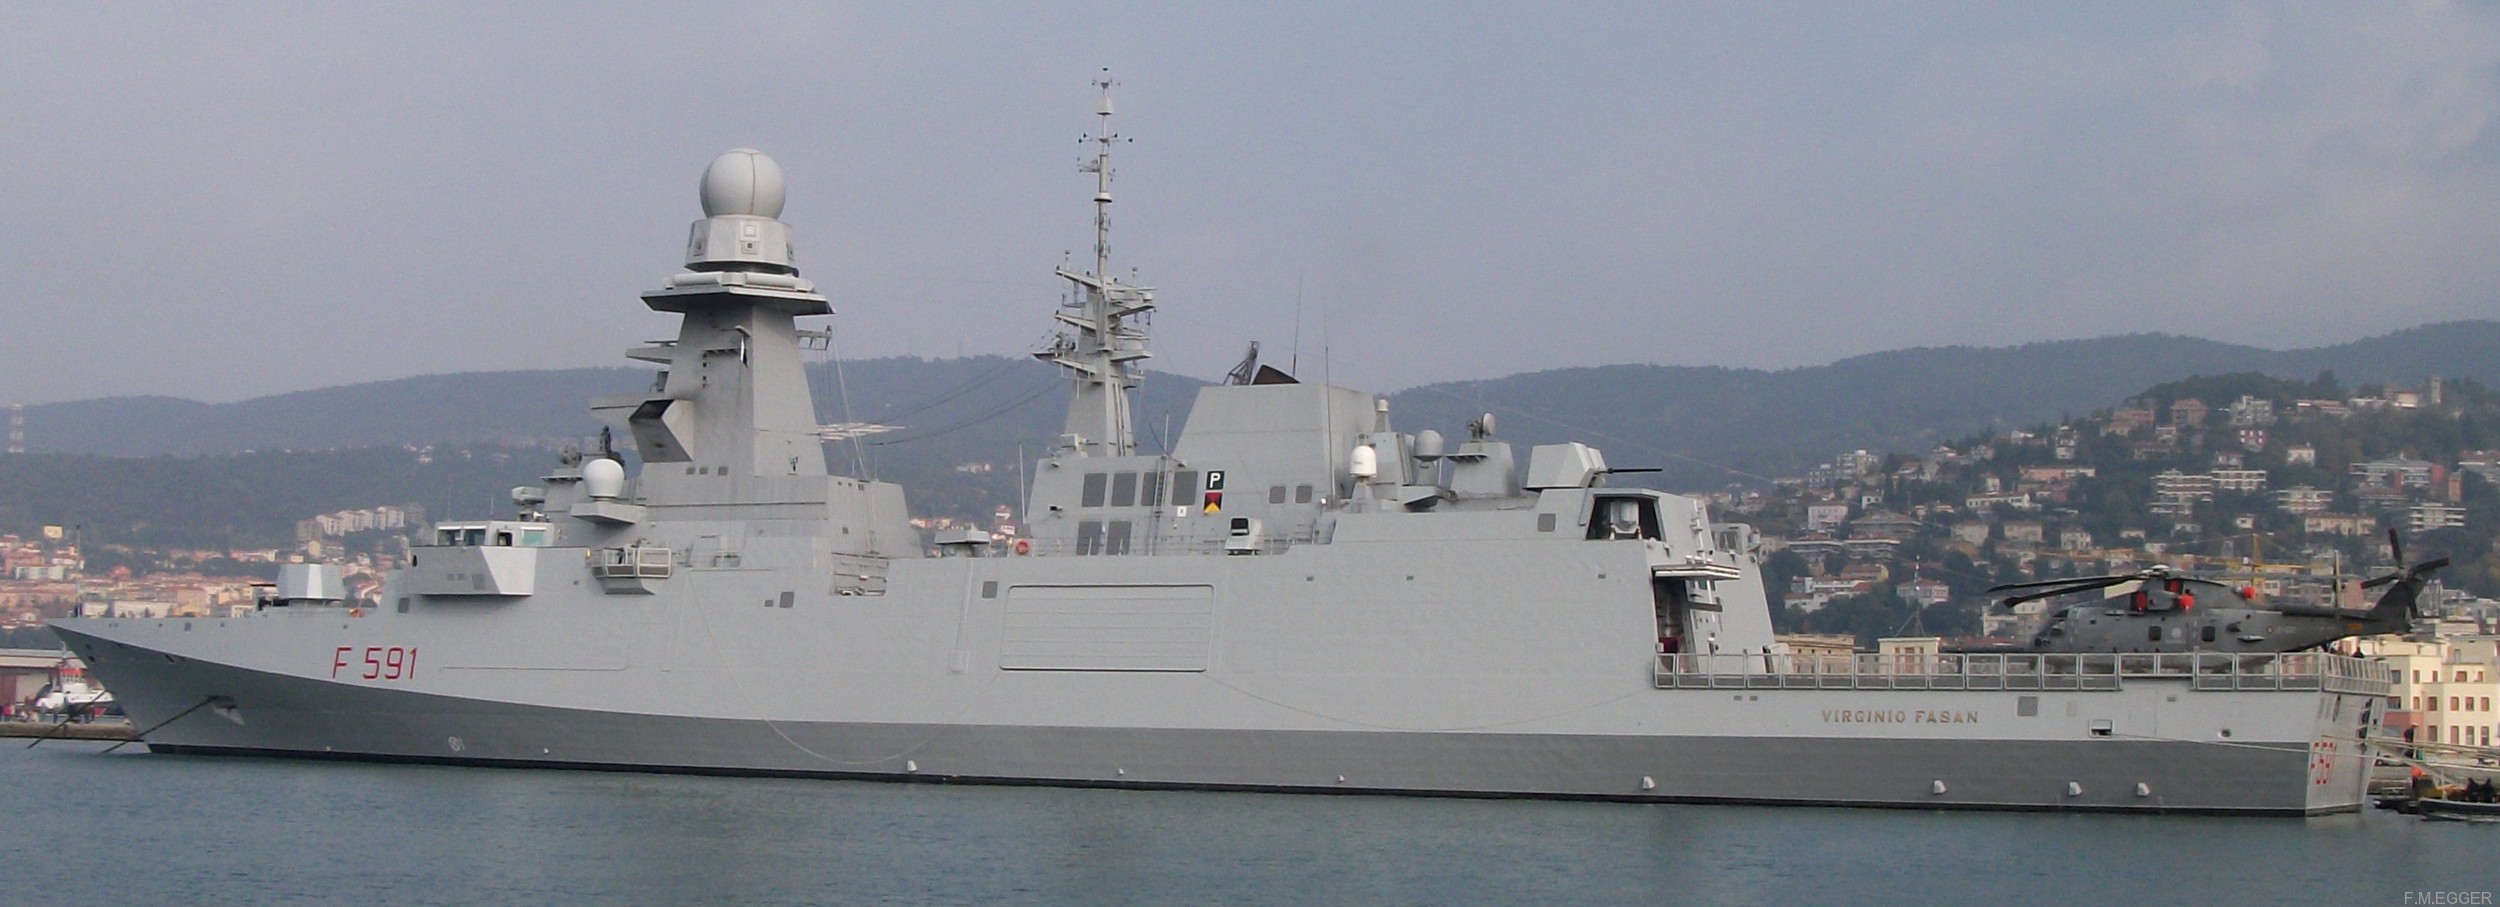 f-591 virginio fasan fremm bergamini class frigate italian navy marine militare 13 port visit trieste